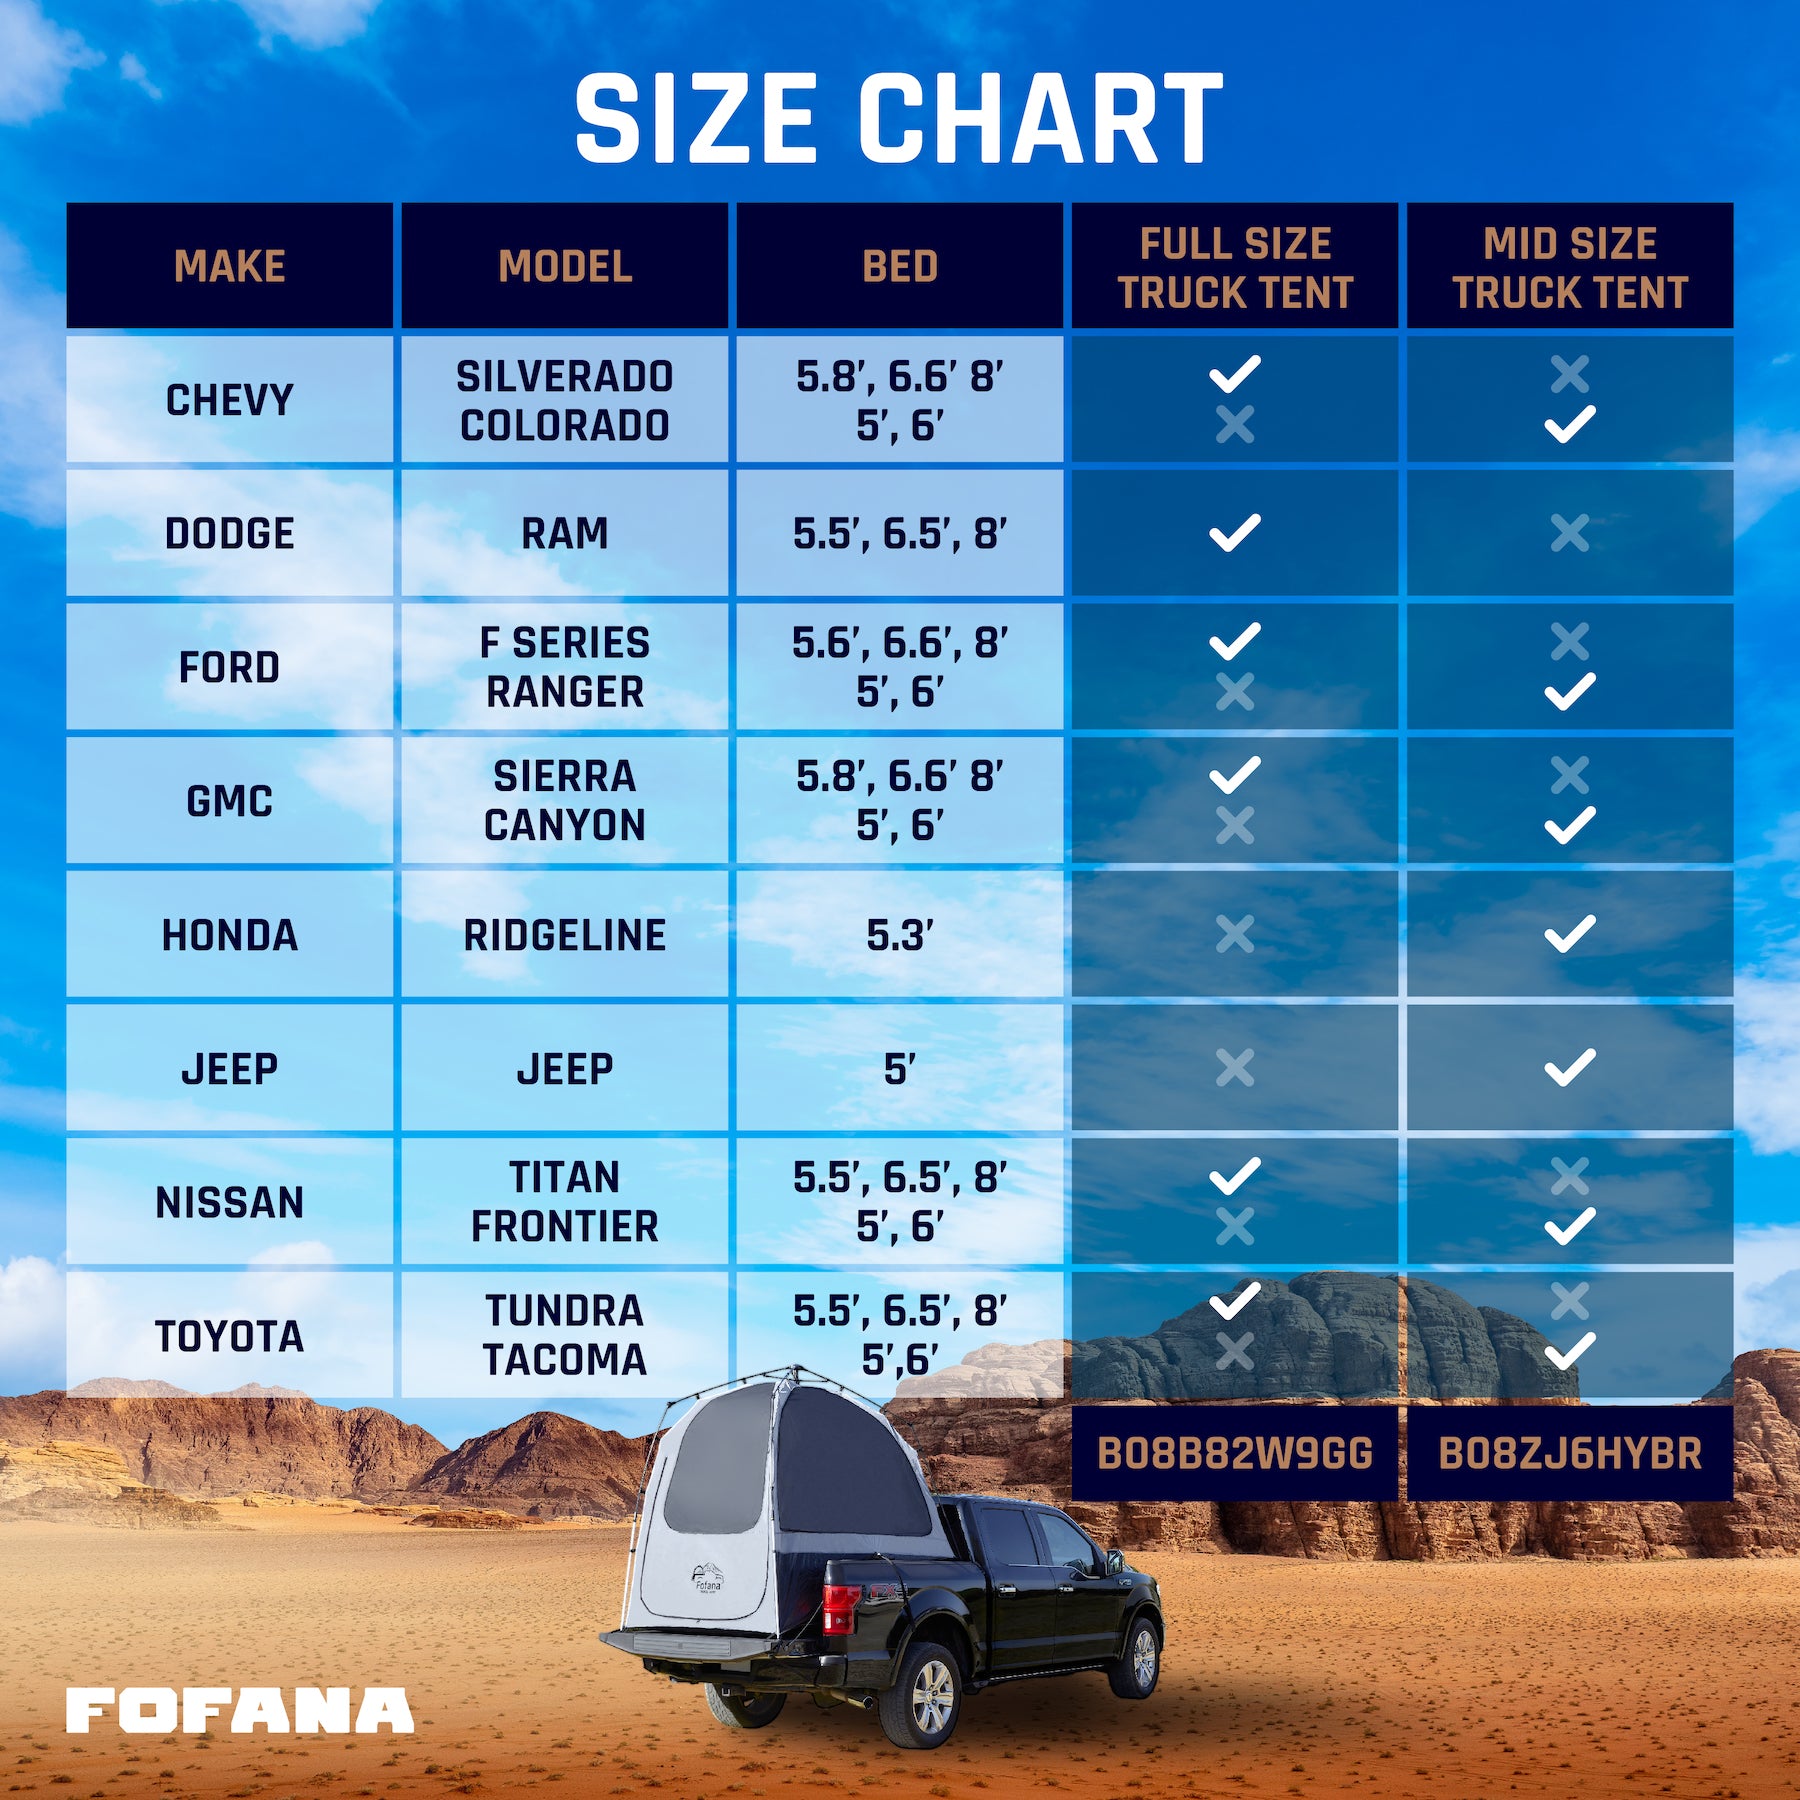 Size of fofana pickup tent